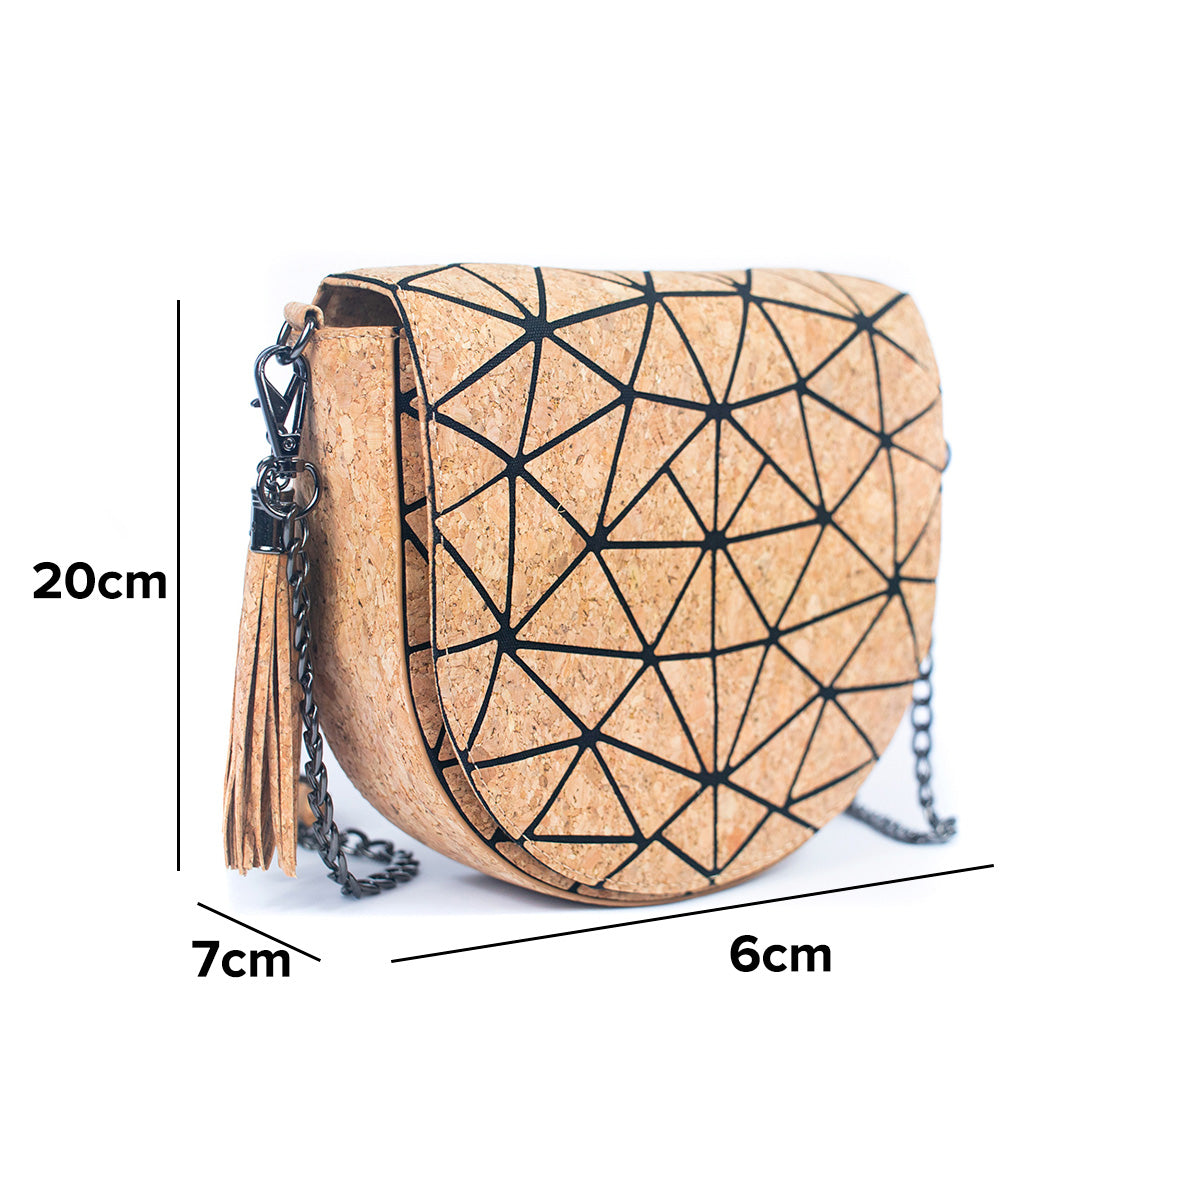 Geometric Patterned Cork Crossbody Bag w/ Irregular Half-Moon Shape & Tassel Detailing | THE CORK COLLECTION